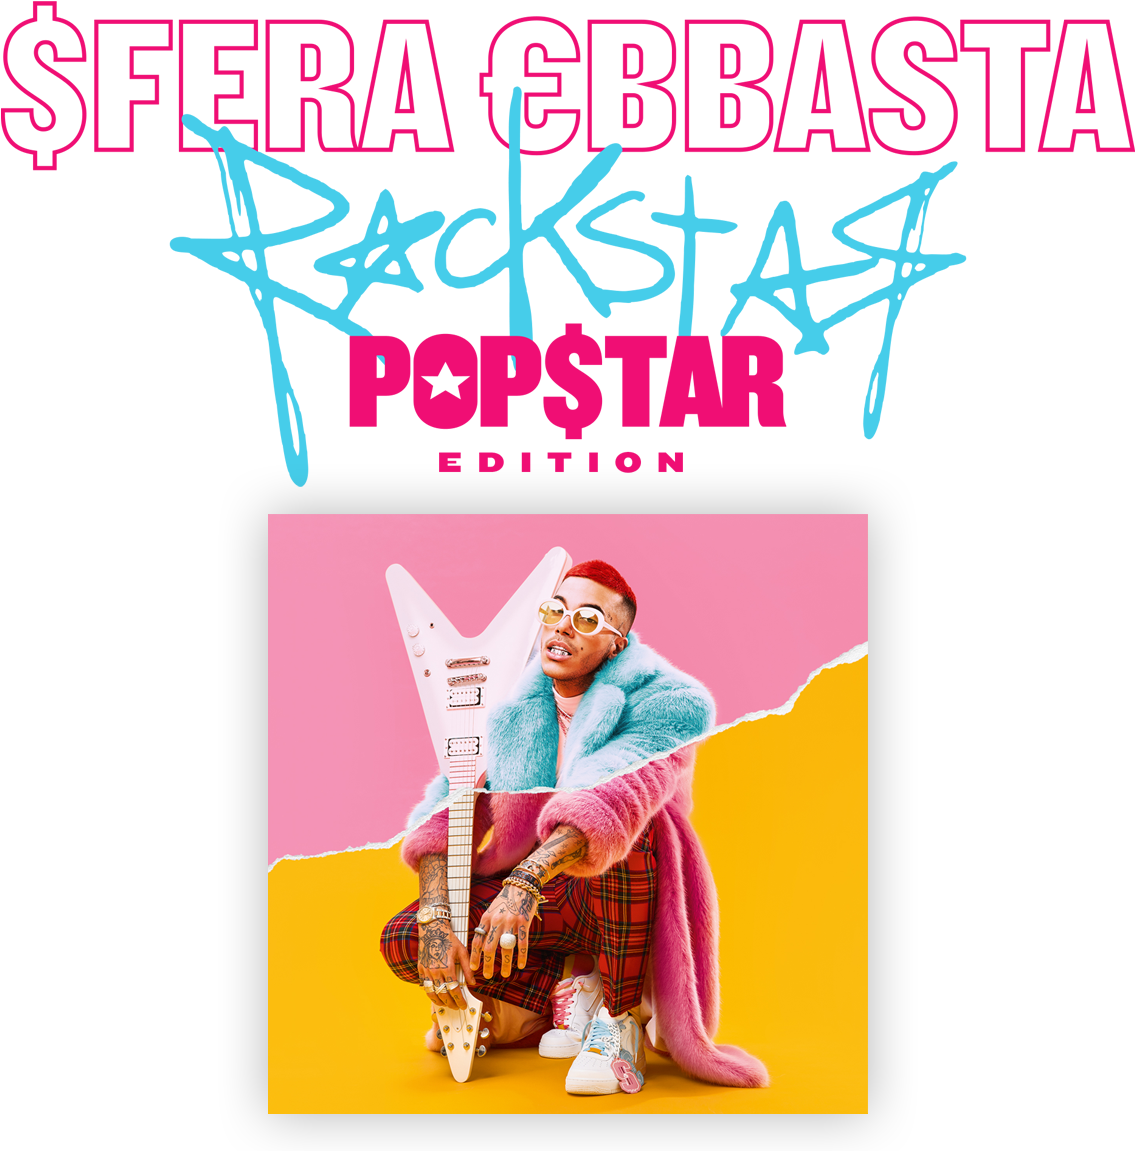 Sfera Ebbasta Rockstar Popstar Edition Album Cover